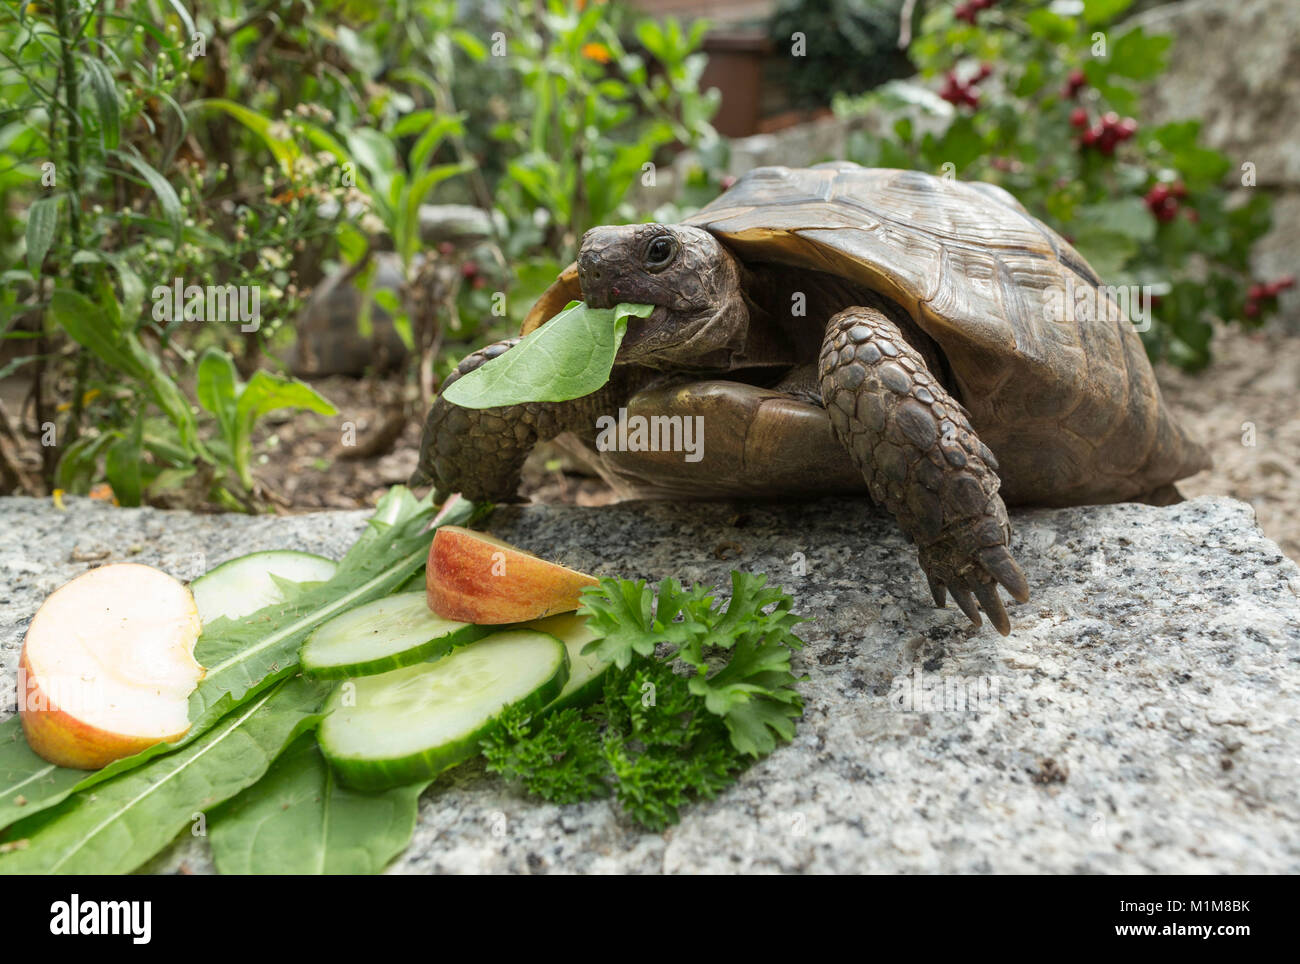 Sperone mediterraneo-thighed tartaruga, tartaruga greca (Testudo graeca). Adulto di mangiare frutta e verdura in Germania Foto Stock